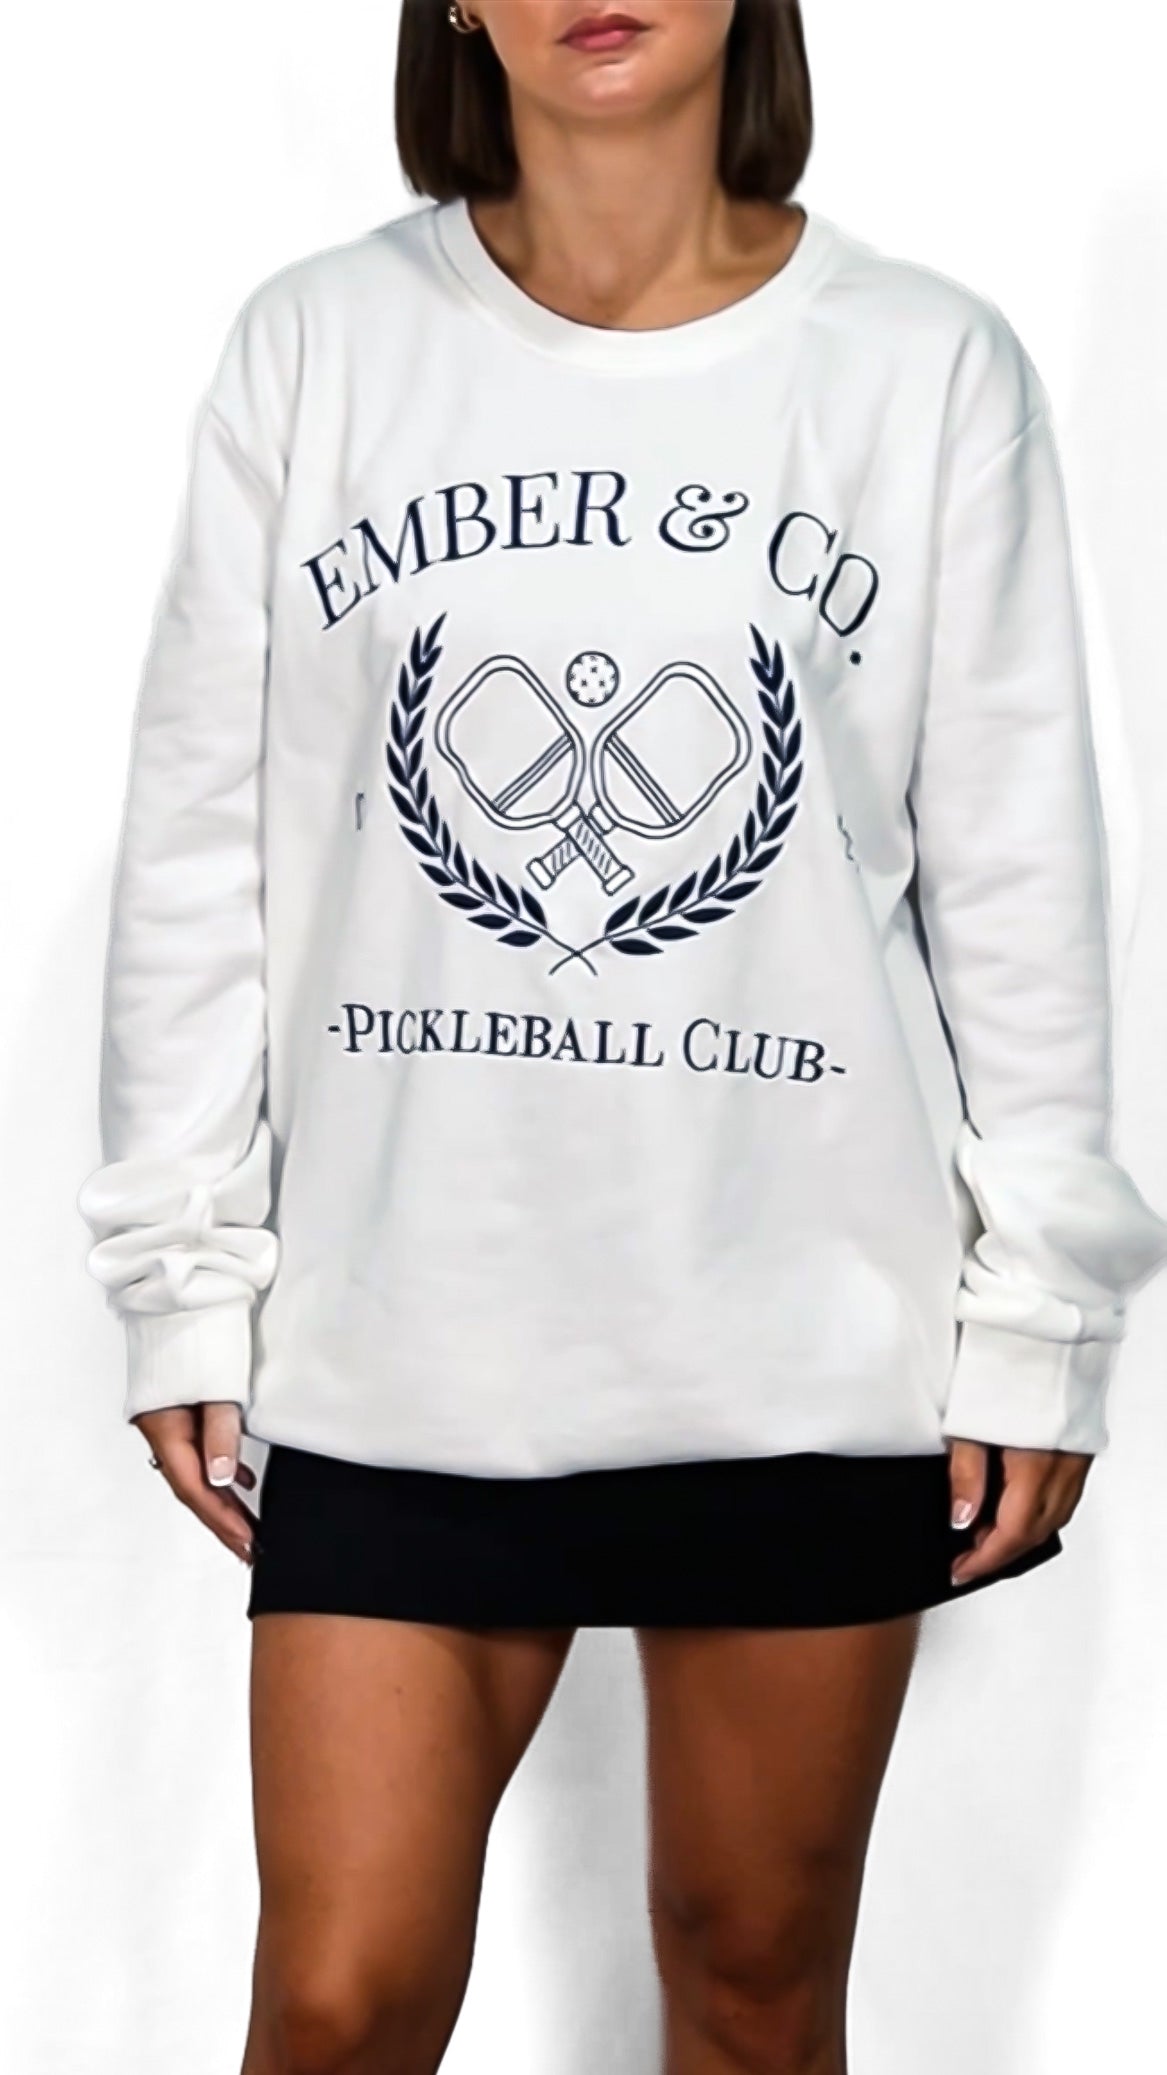 The Club Sweatshirt